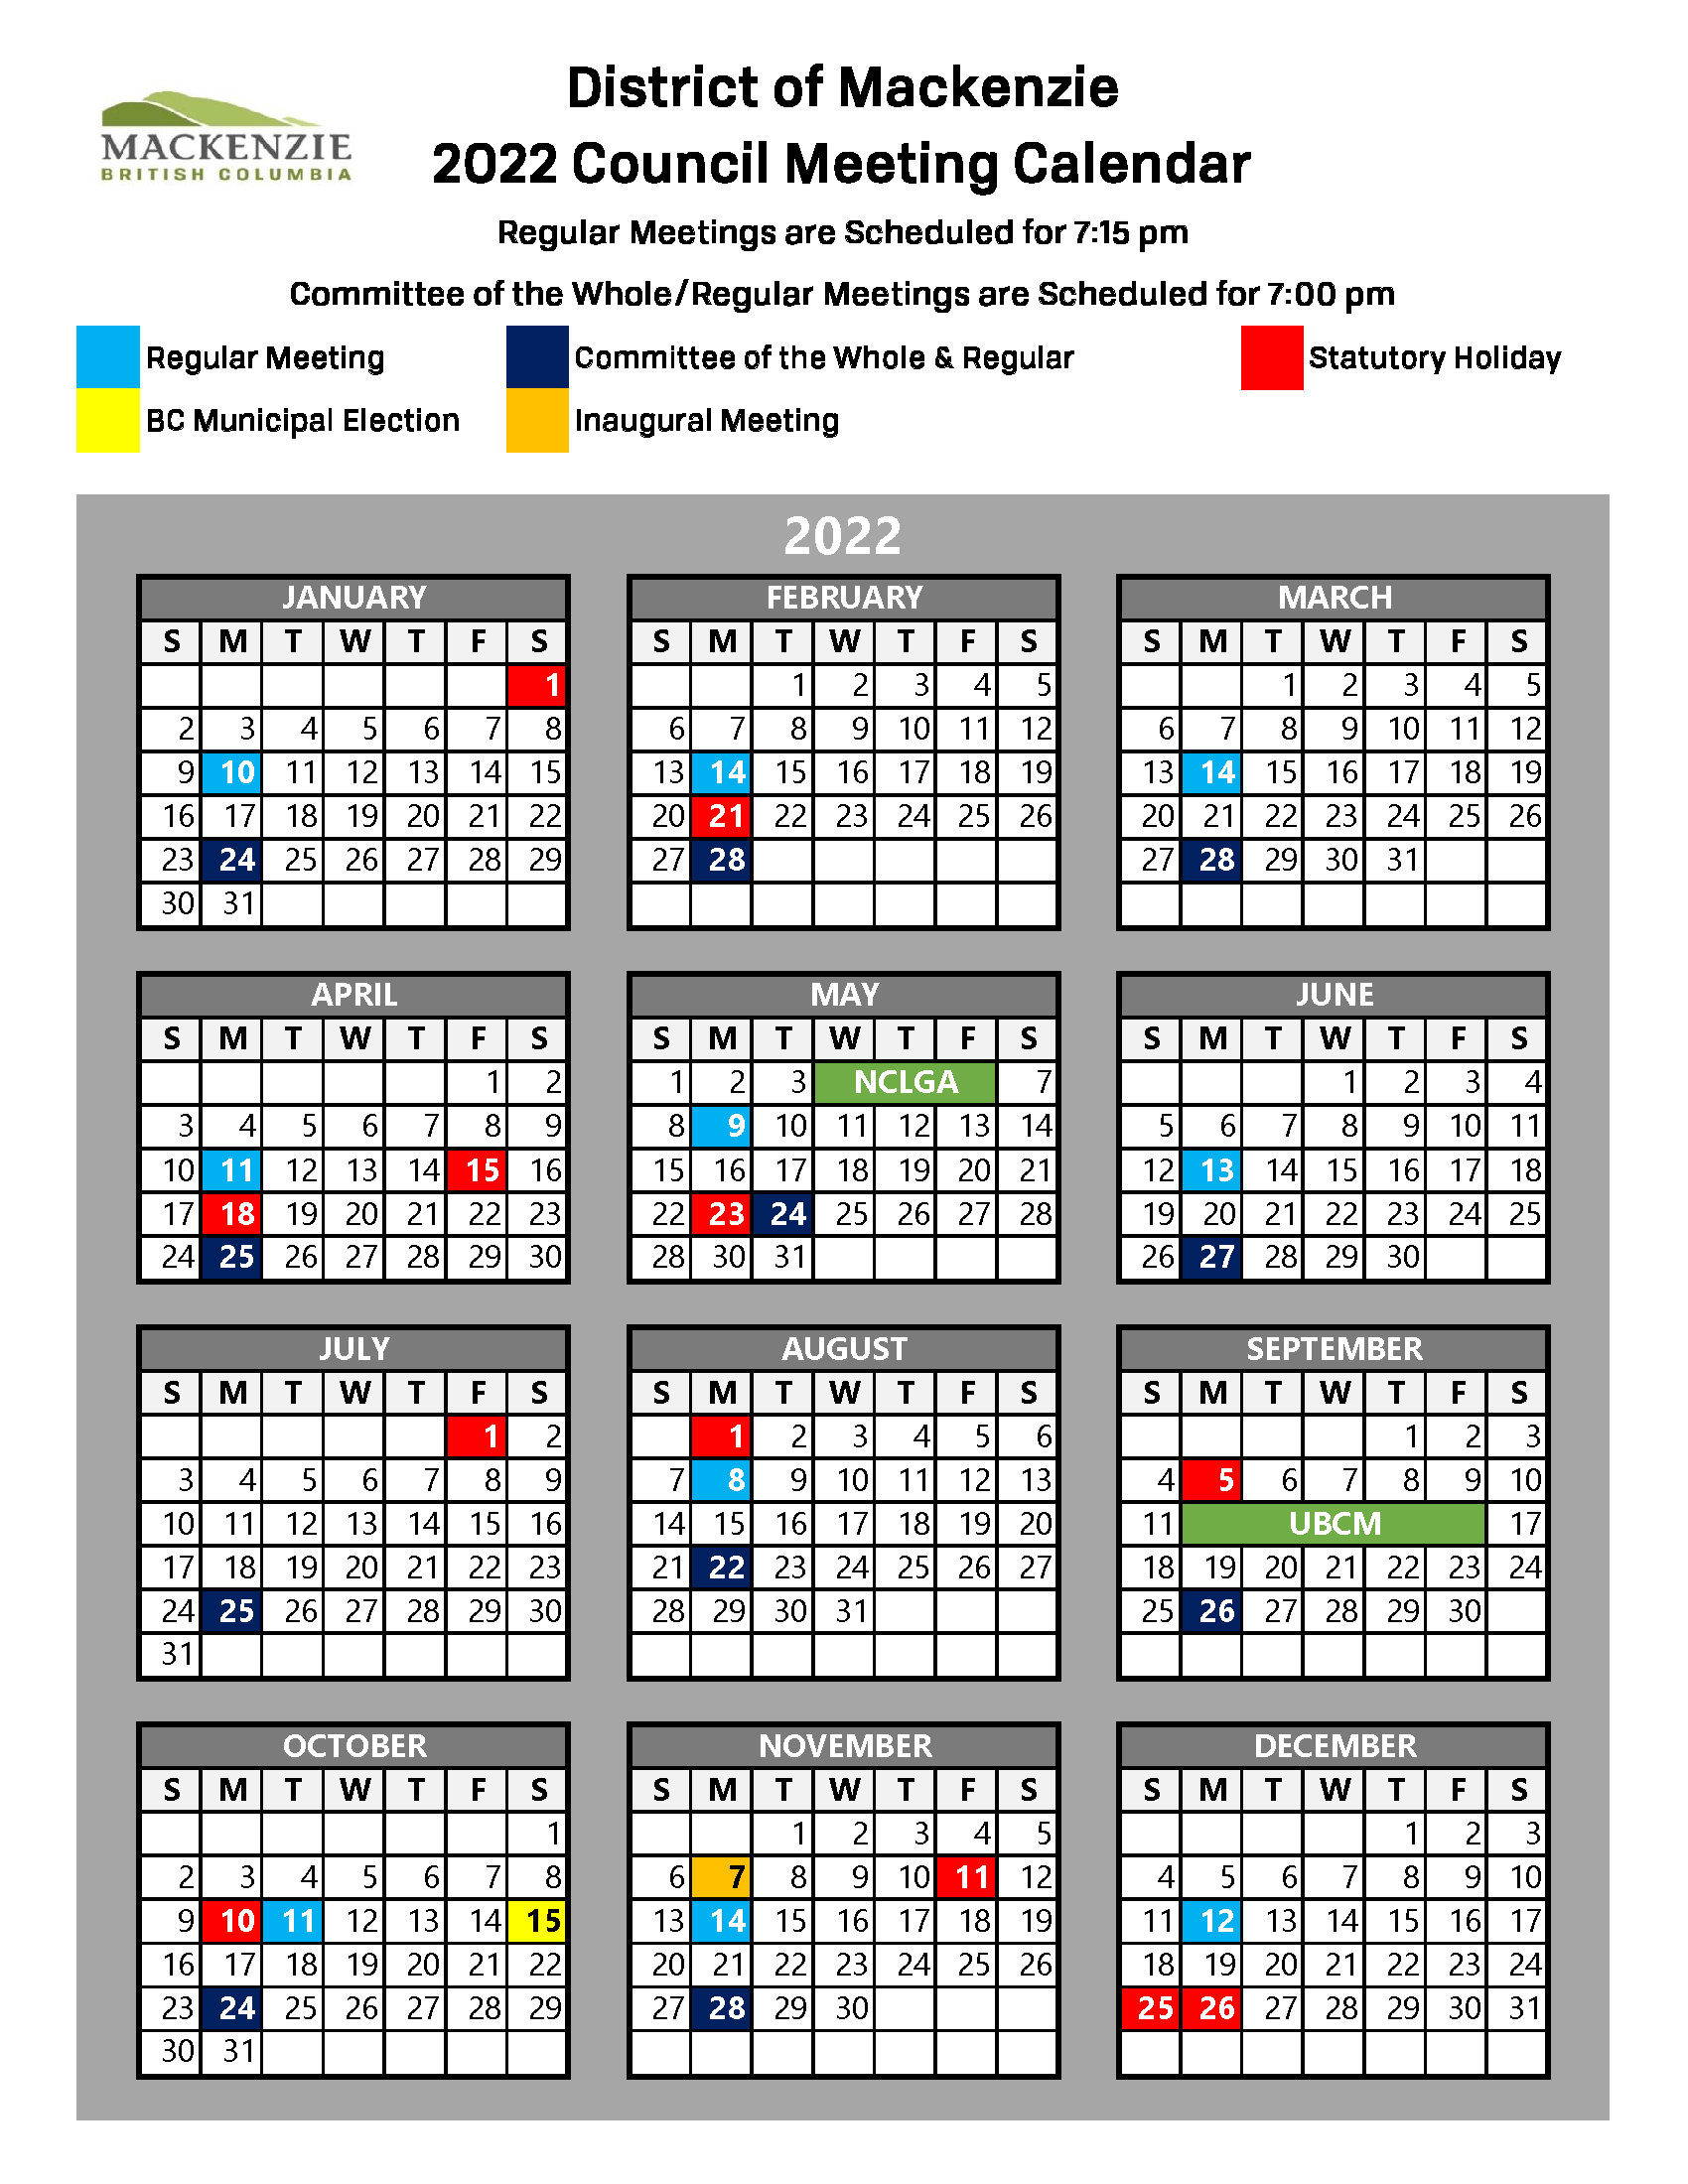 Council Meeting Calendar 2022